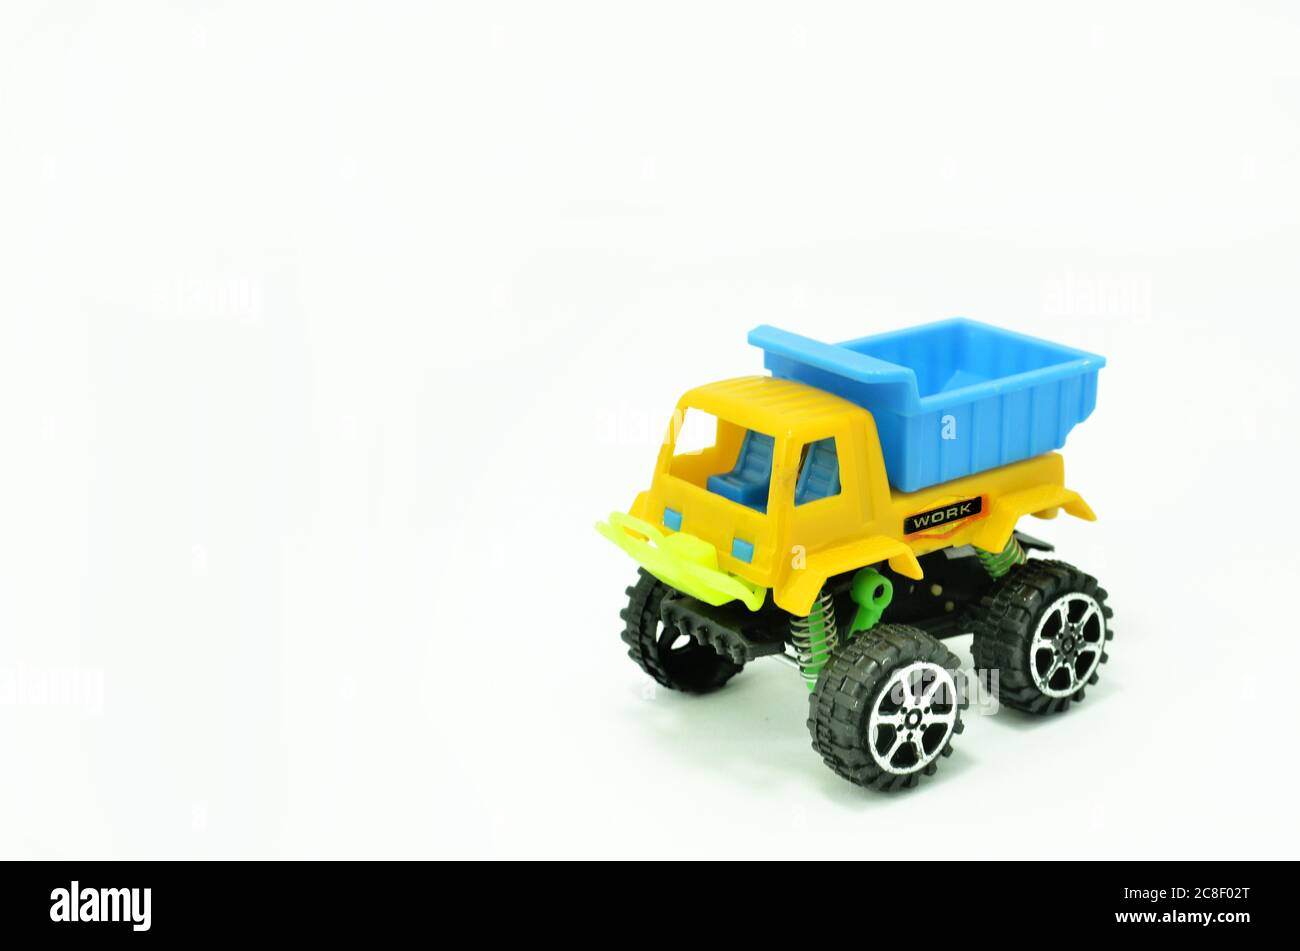 Plastic dump truck toy isolated on white background Stock Photo